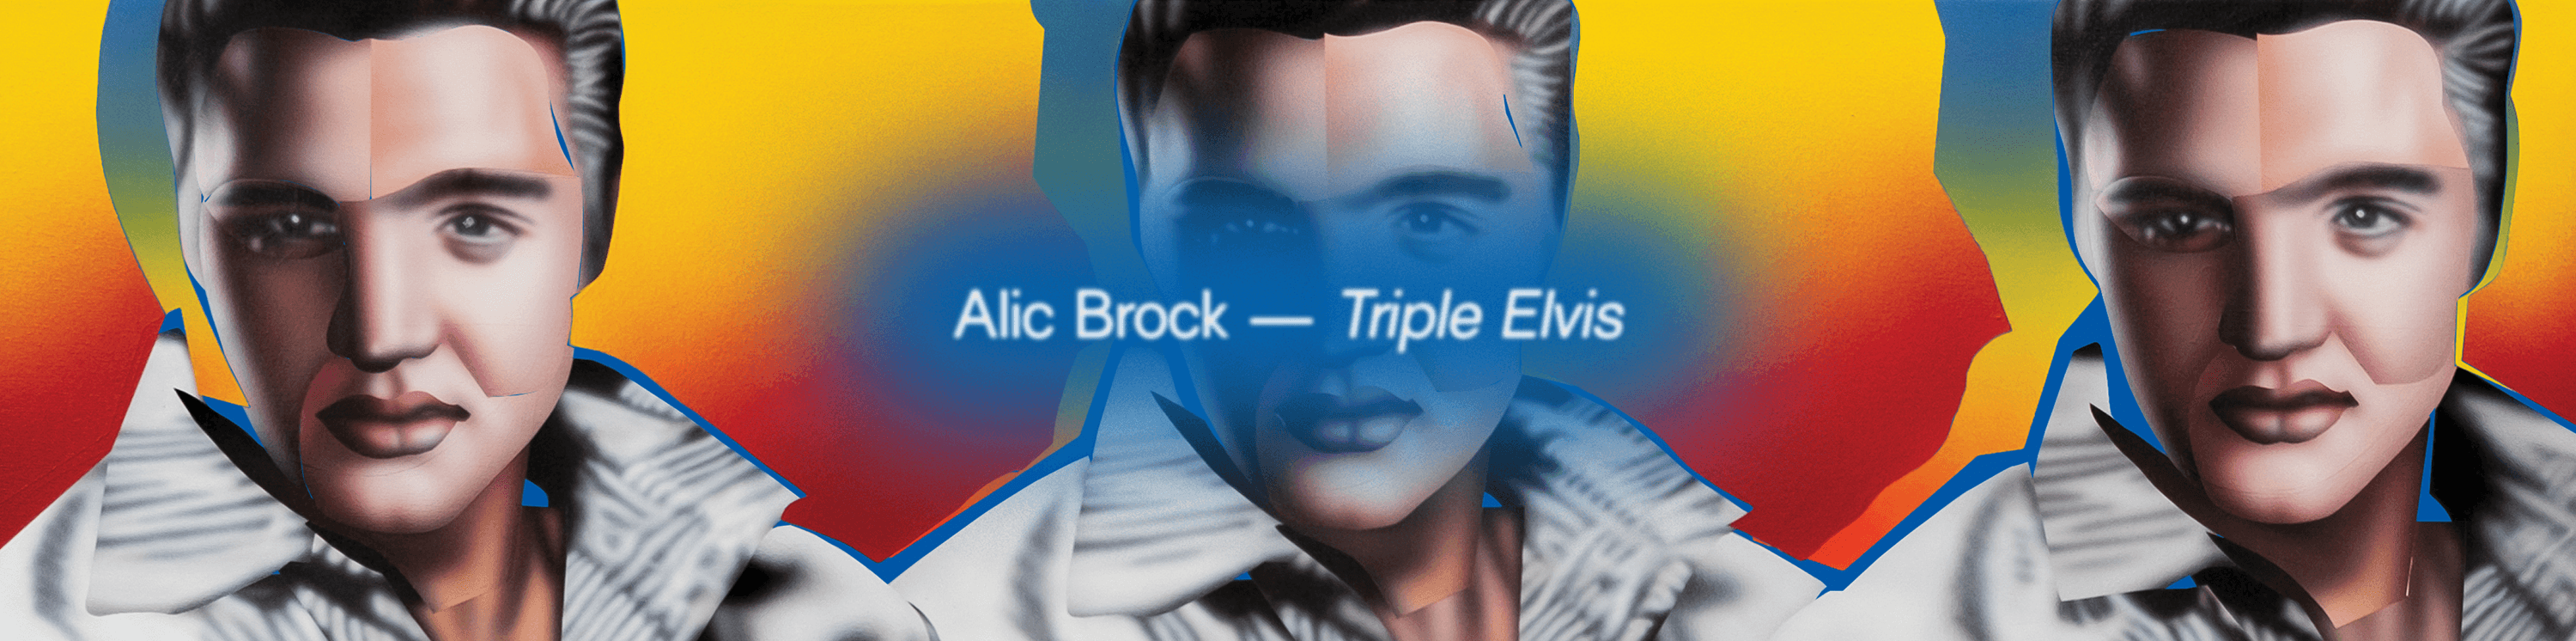 Alic Brock - Triple Elvis